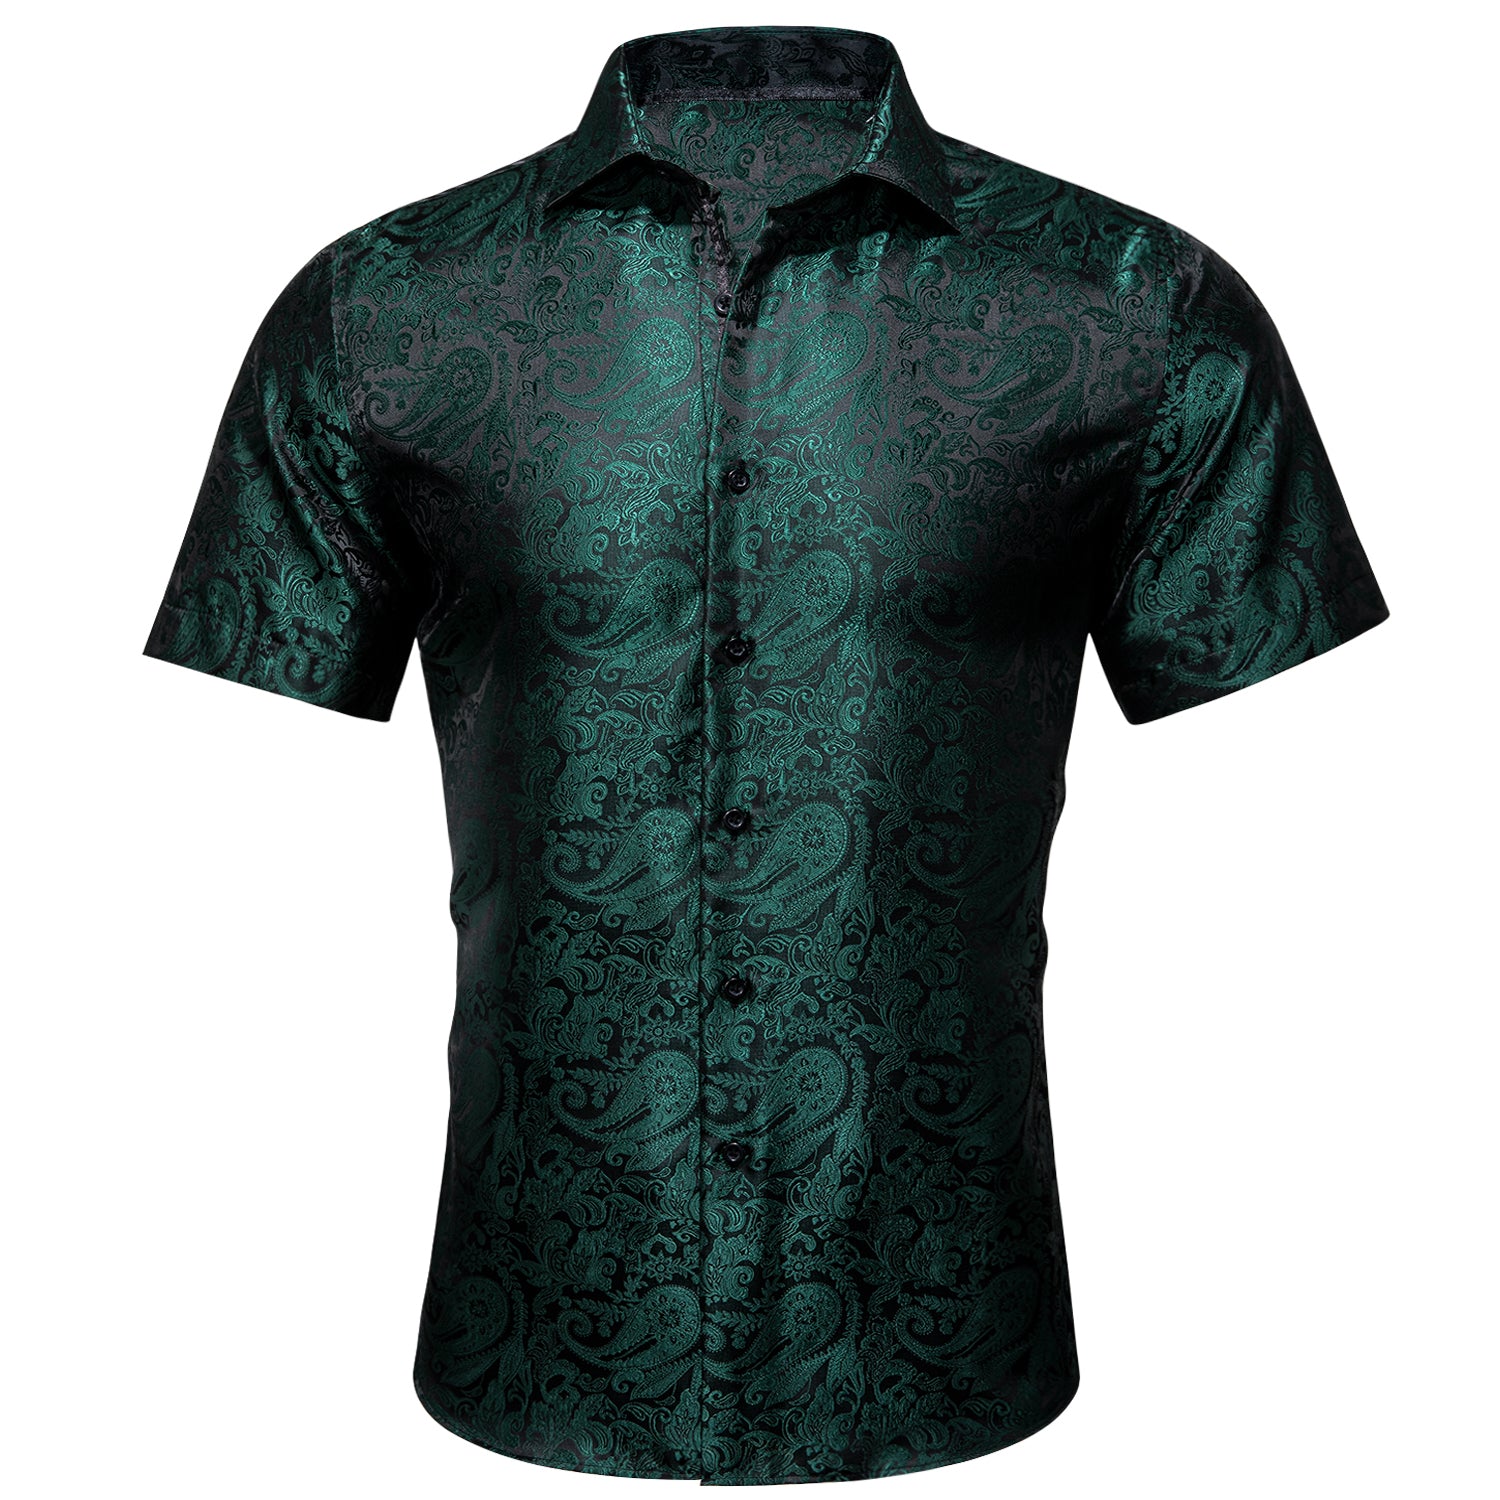 Barry.wang Green Silk Paisley Short Sleeve Daily Slim Fit Men's Shirt